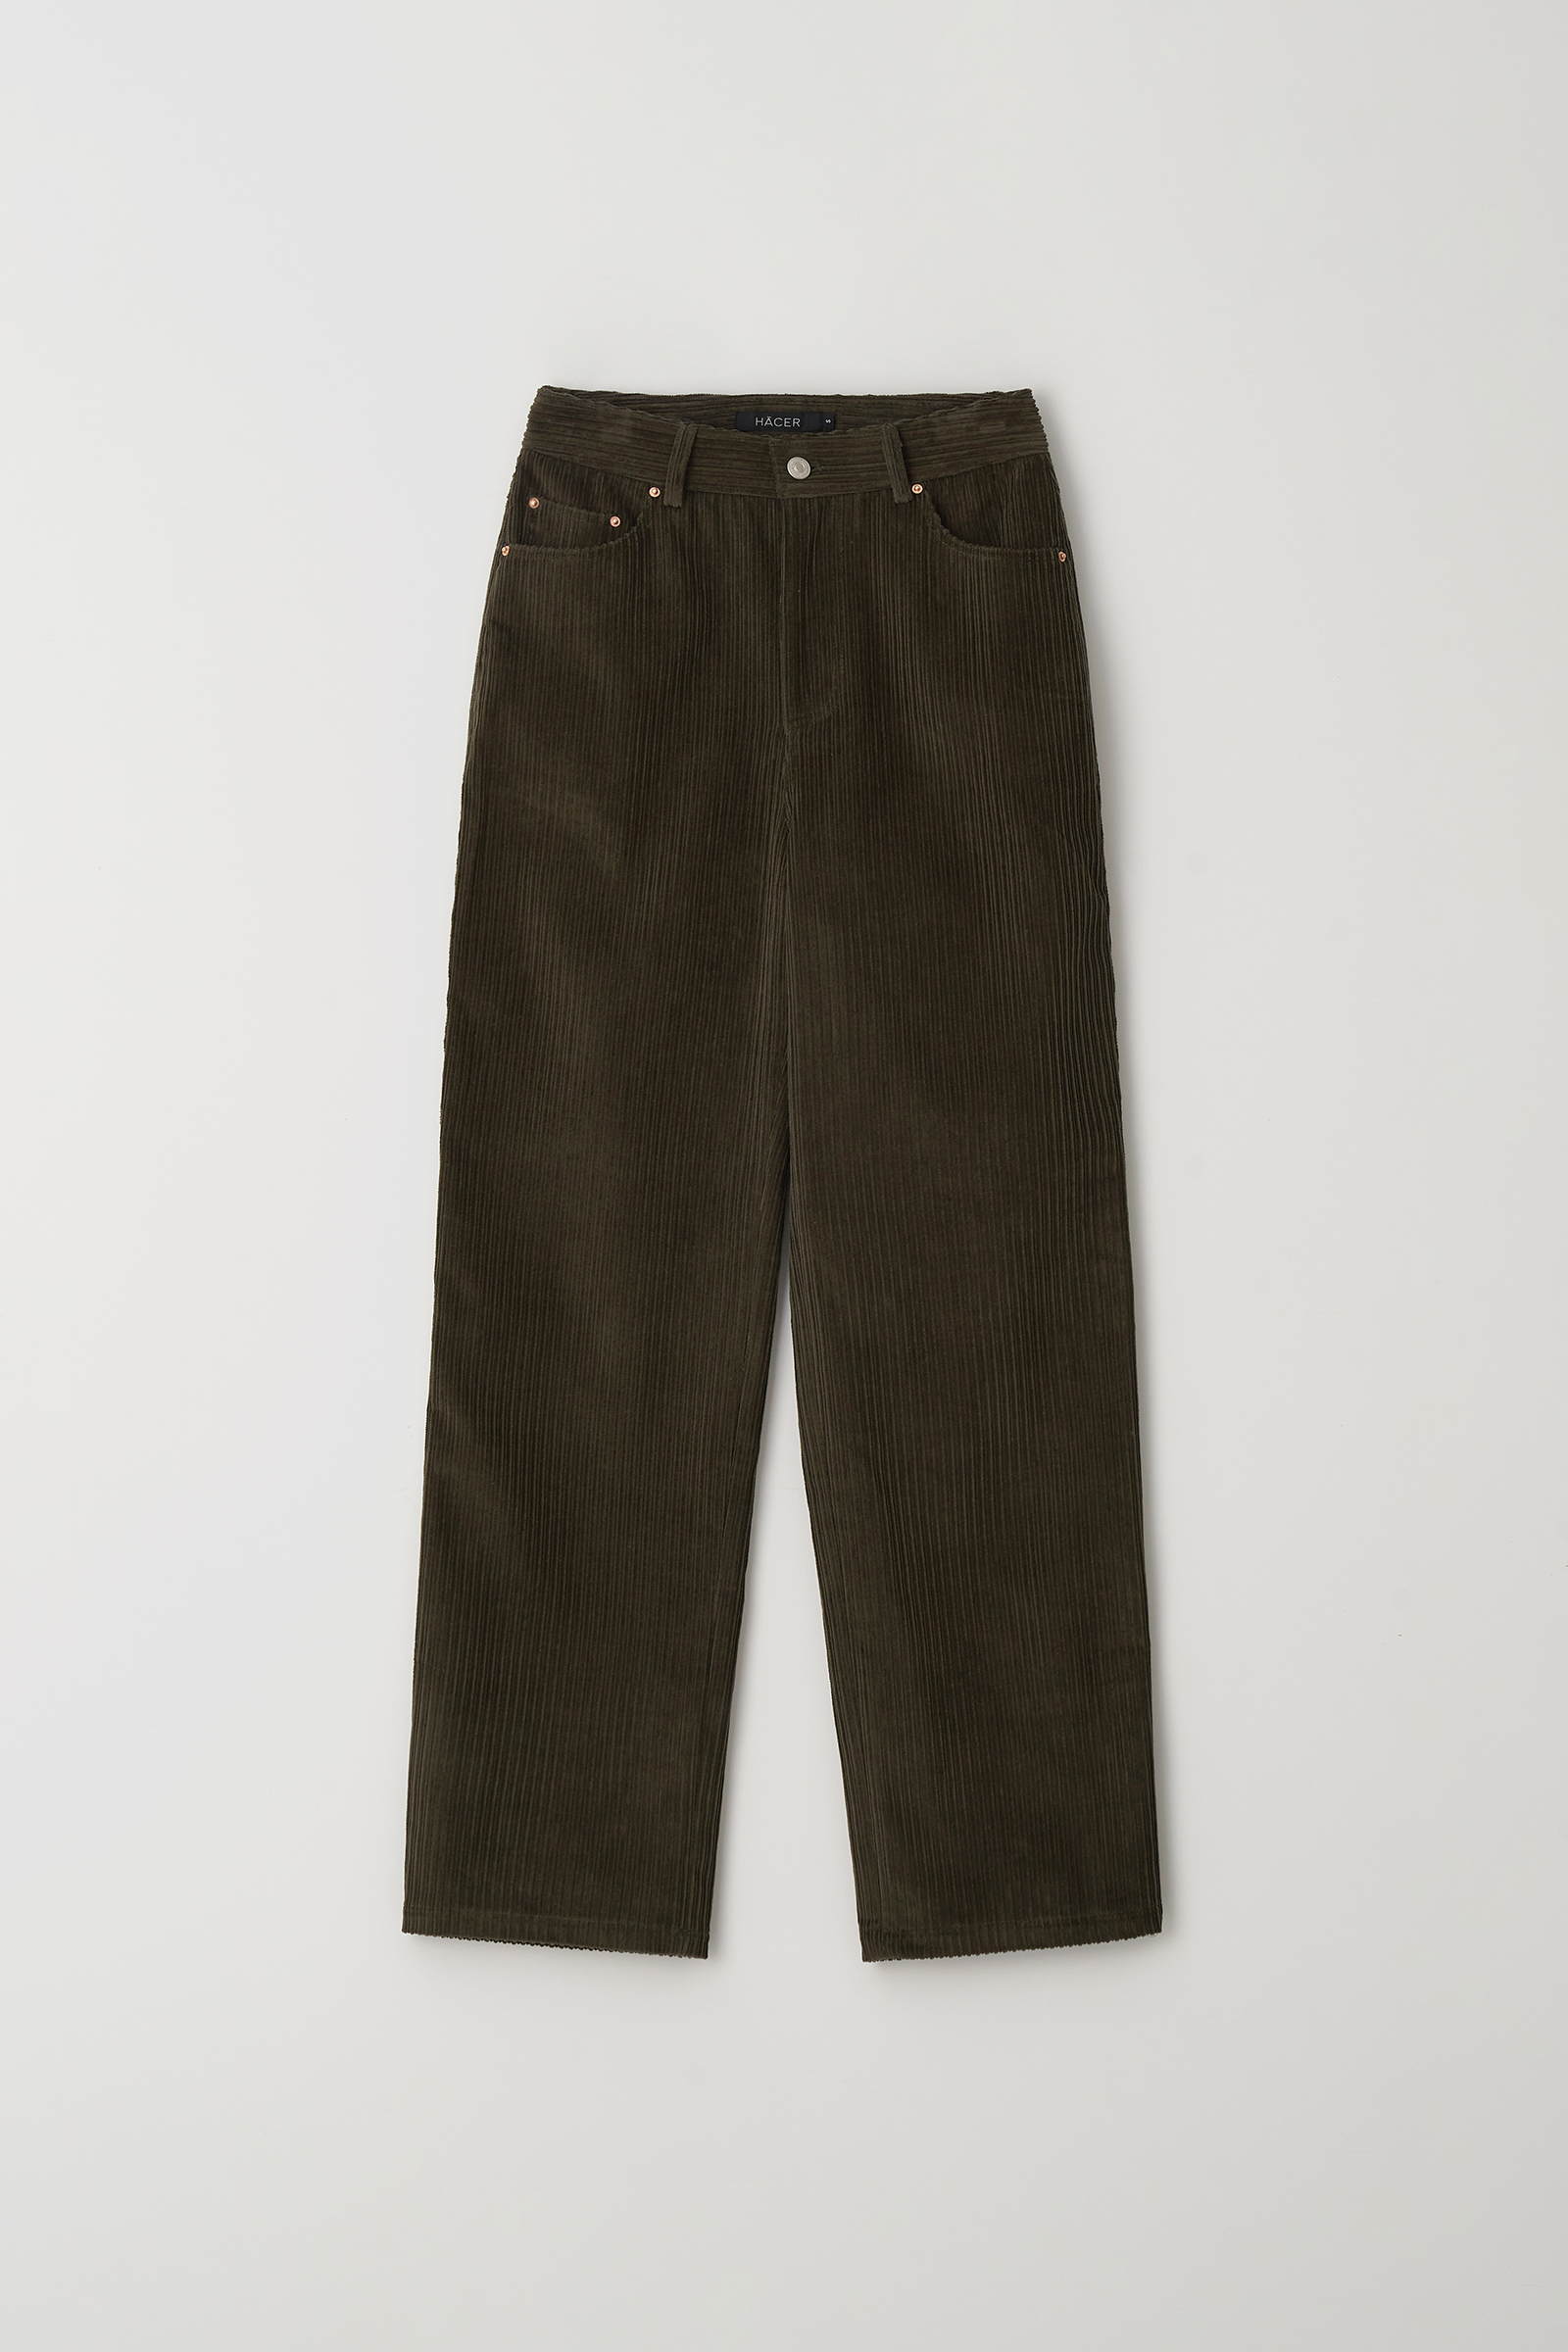 [2nd] Row Corduroy Pants